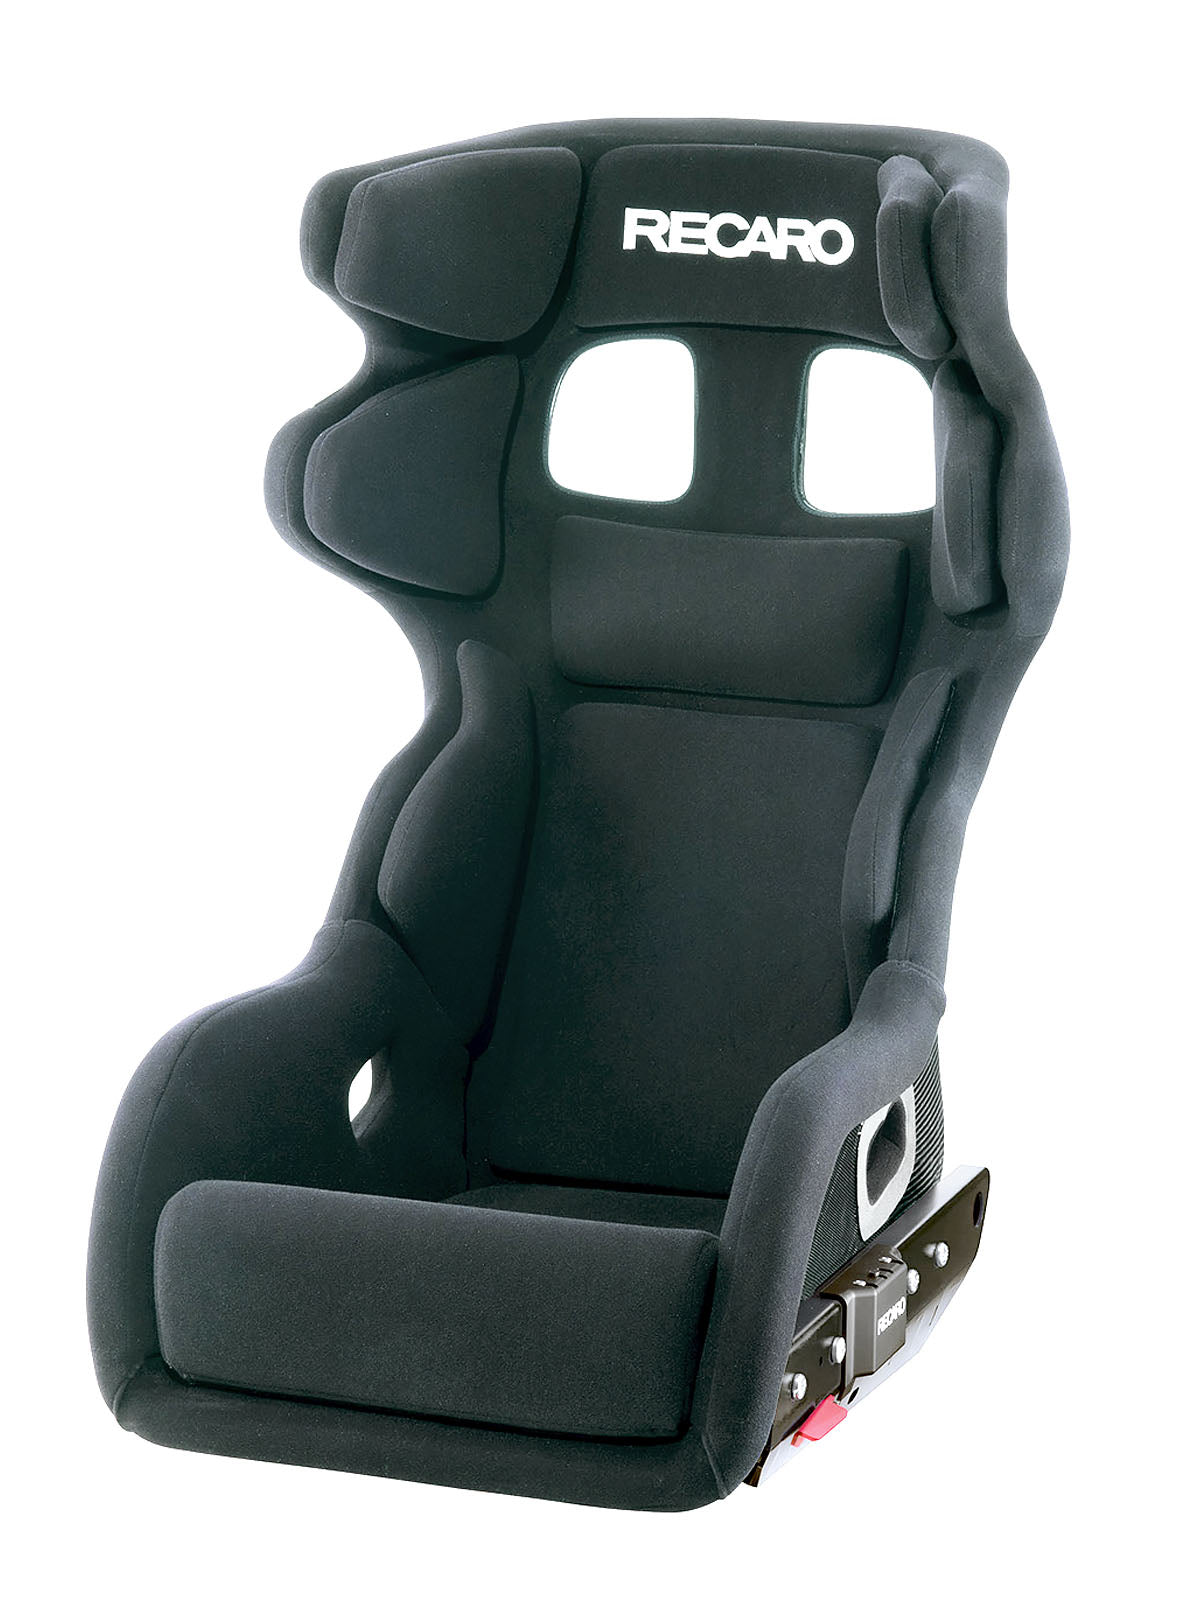 Recaro P1300 GT LW (Light Weight) Racing Seat